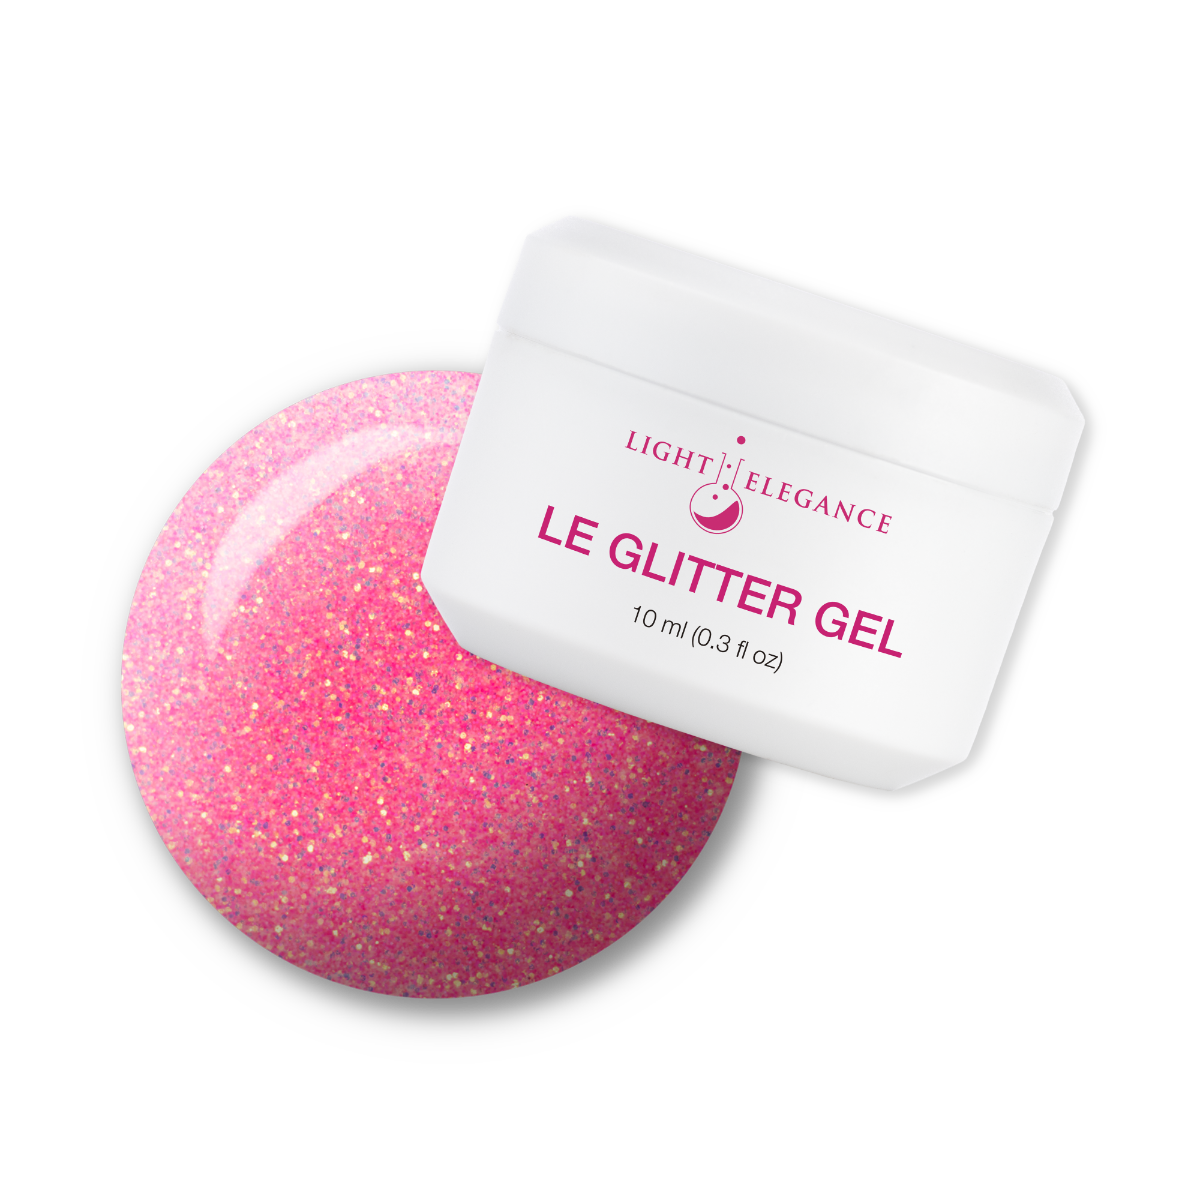 Light Elegance Glitter Gel - Fruit Snacks :: New Packaging - Creata Beauty - Professional Beauty Products